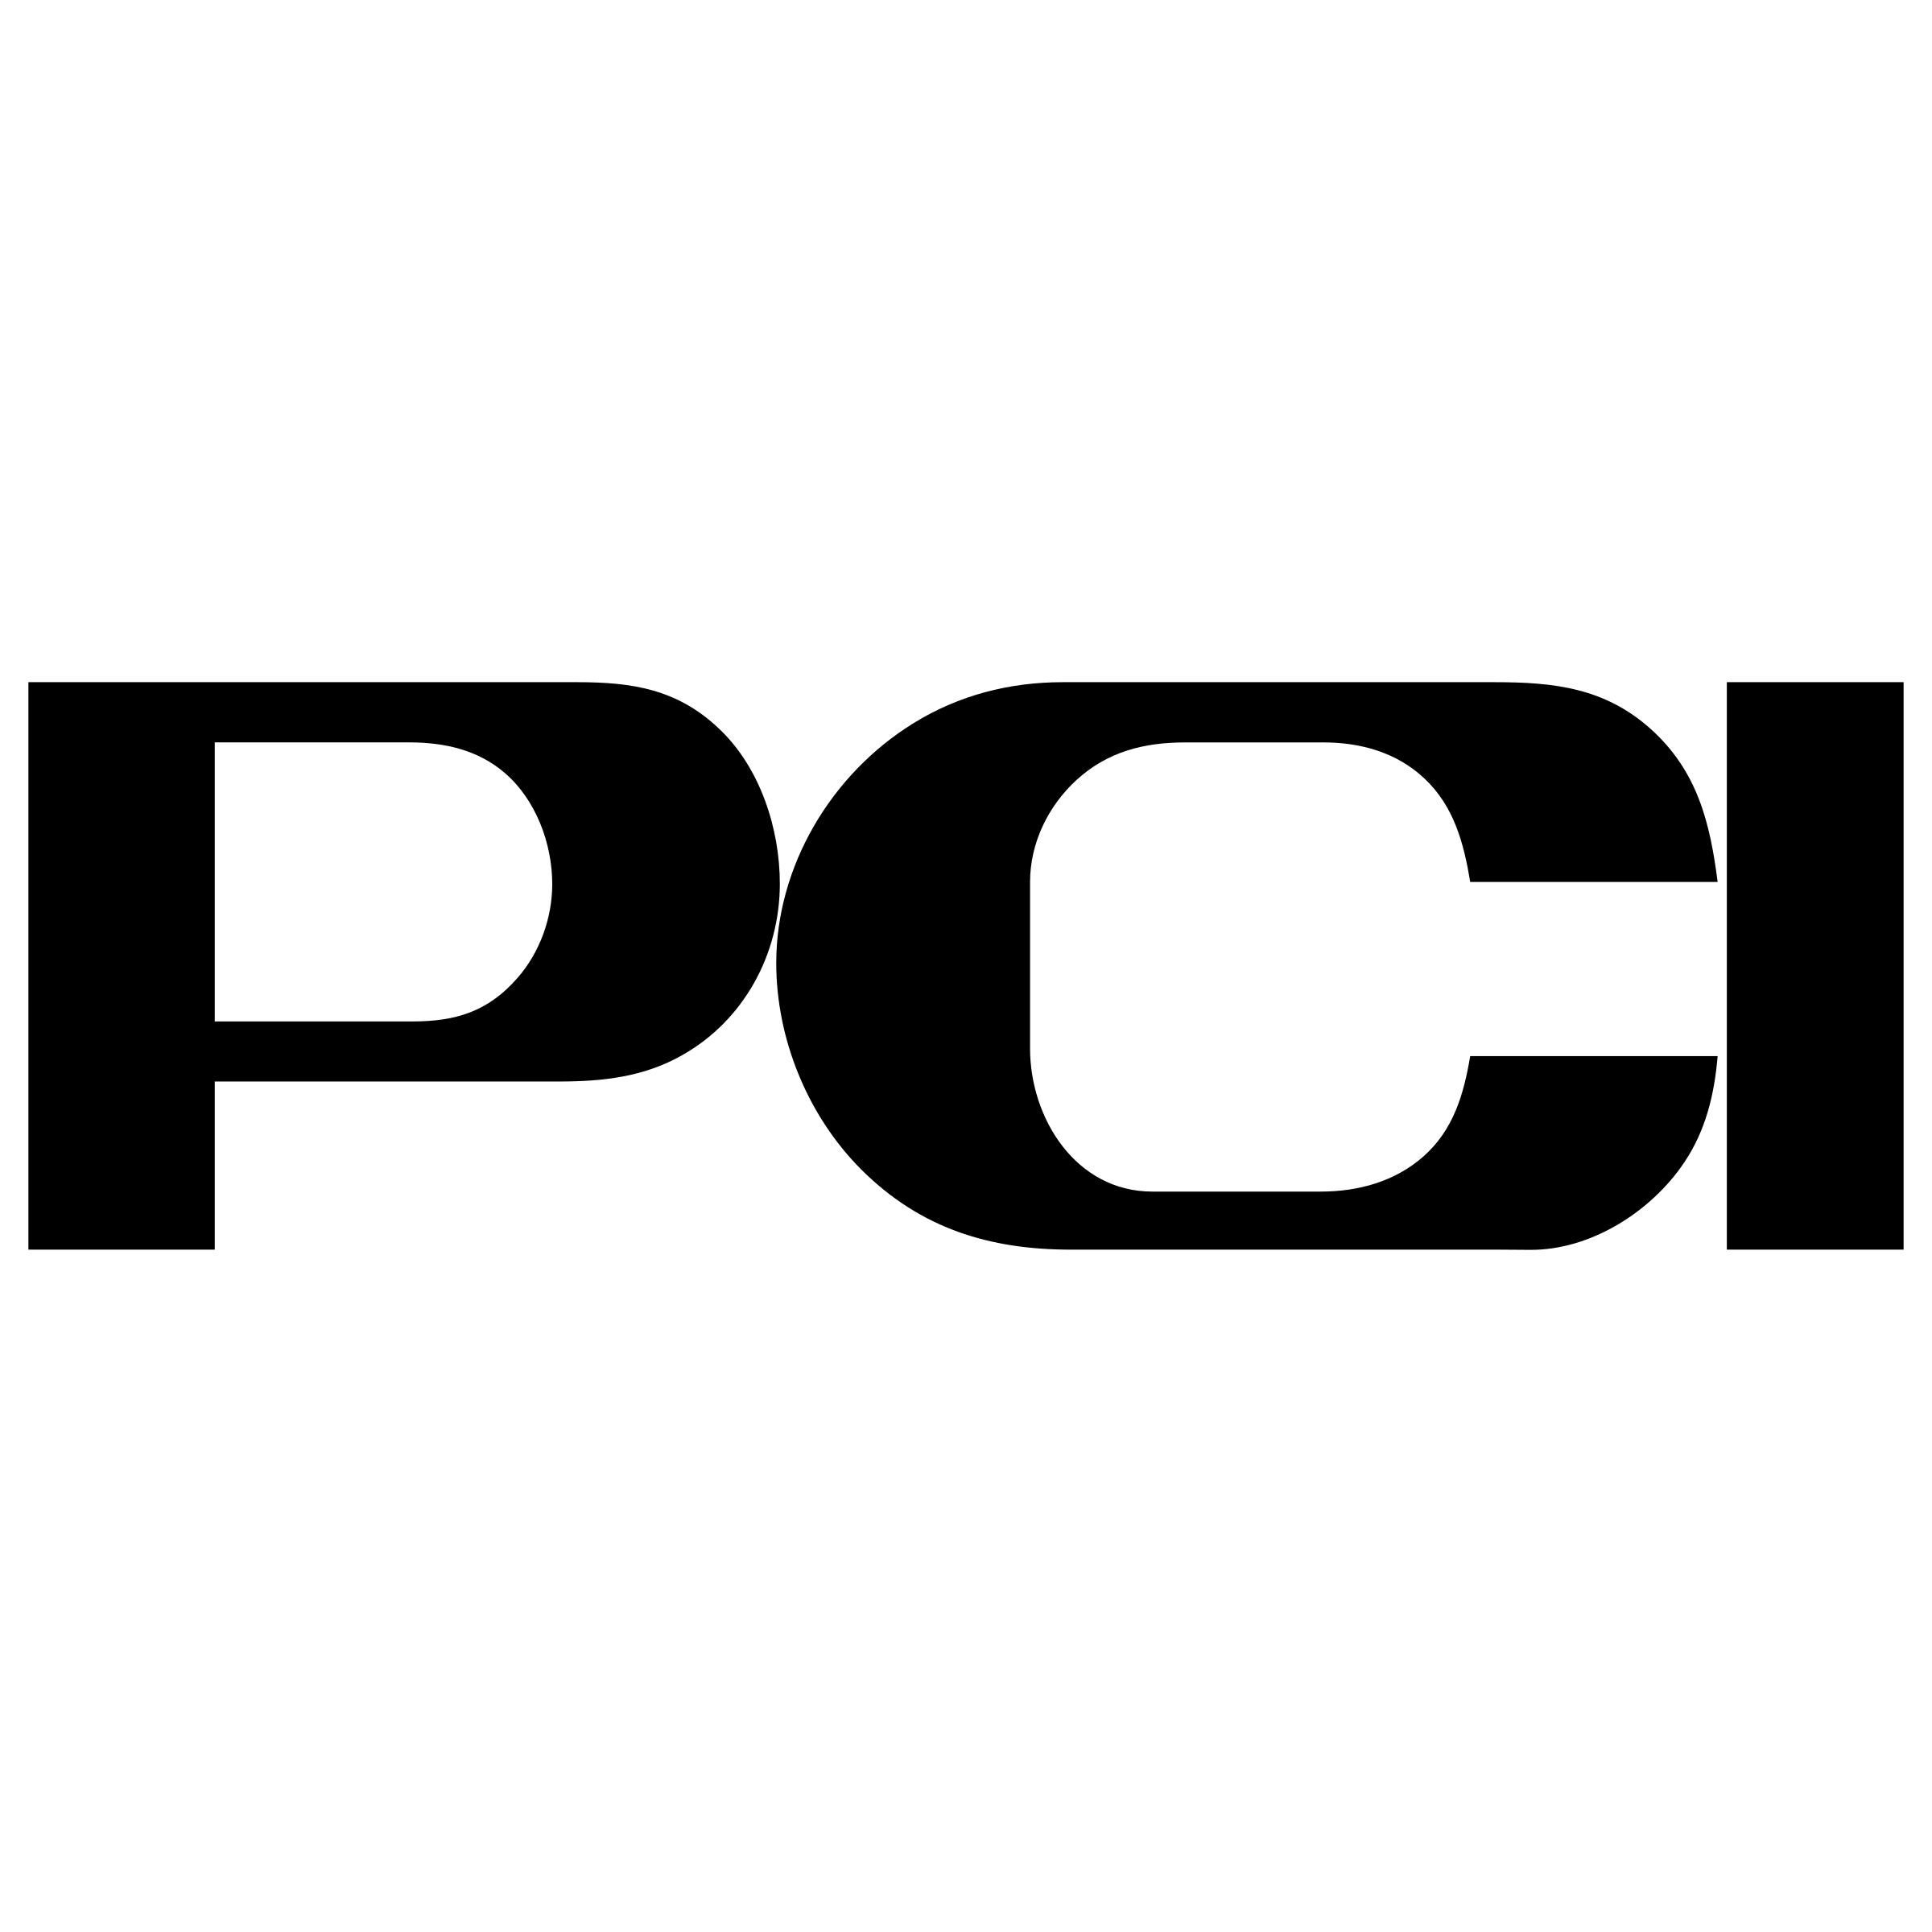 PCI Logo - PCI Logo PNG Transparent & SVG Vector